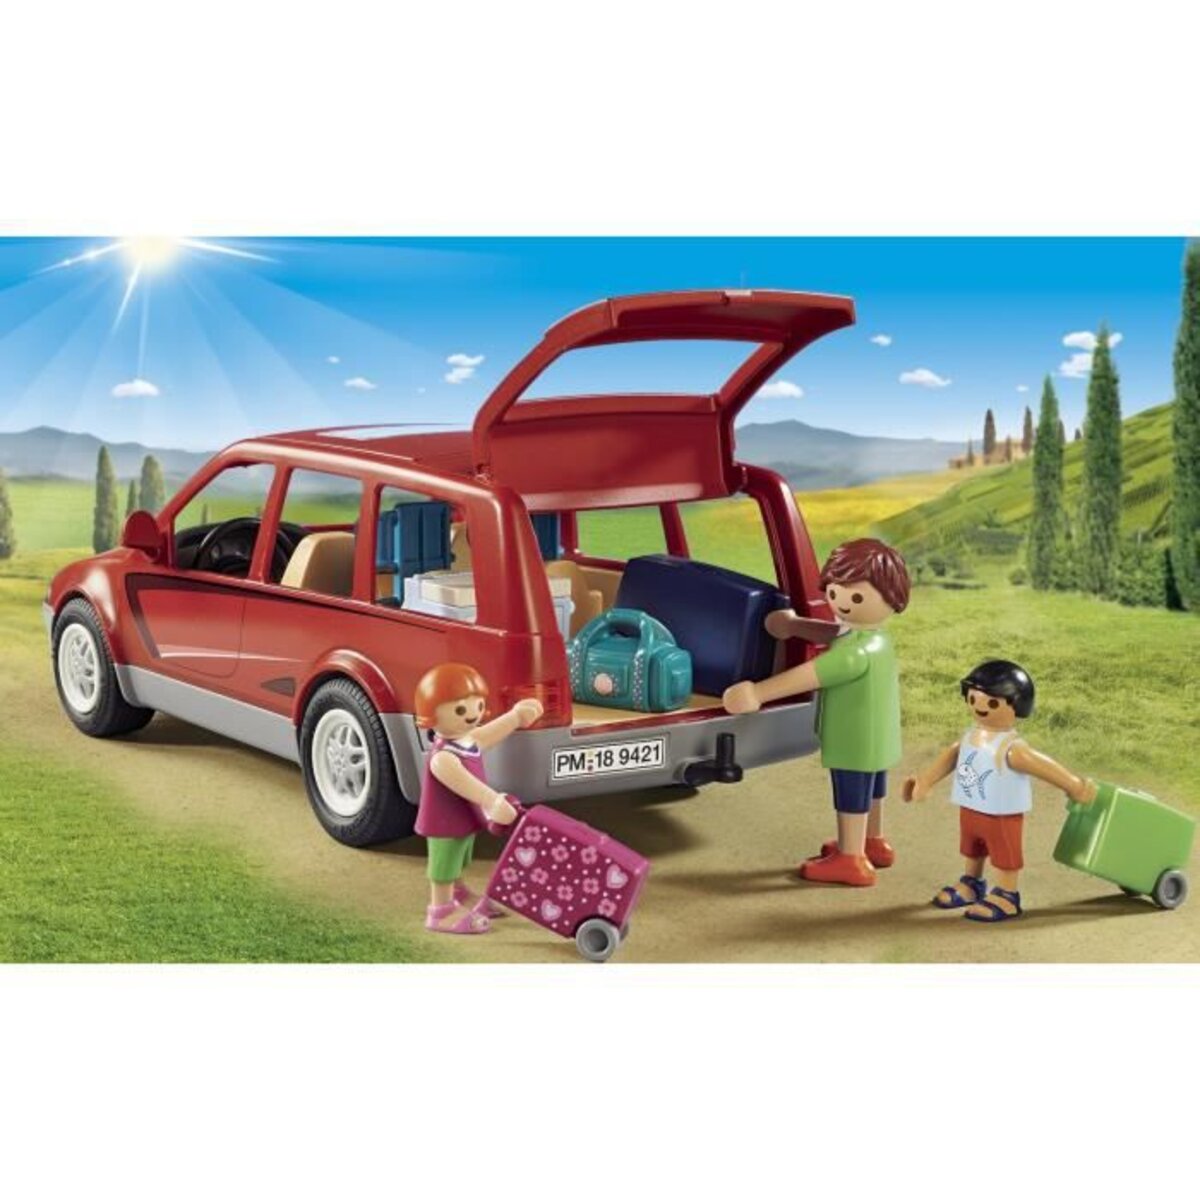 Playmobil 9421 - family fun - famille avec voiture - La Poste